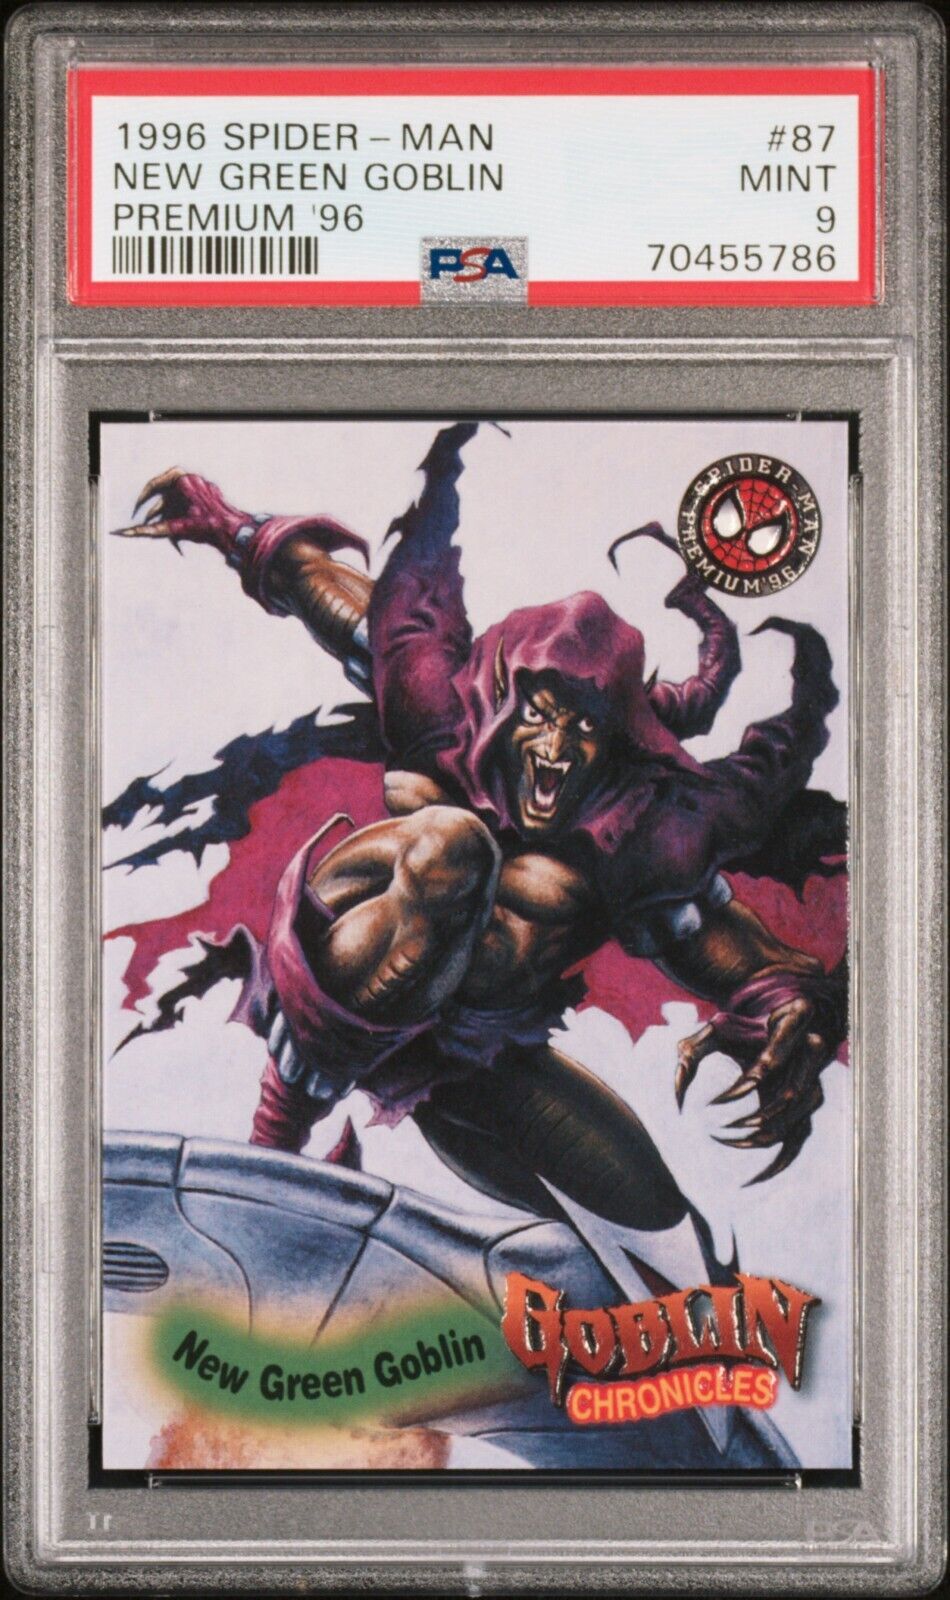 1996 Spider-Man Premium Eternal Evil New Green Goblin #87 PSA 9 Mint